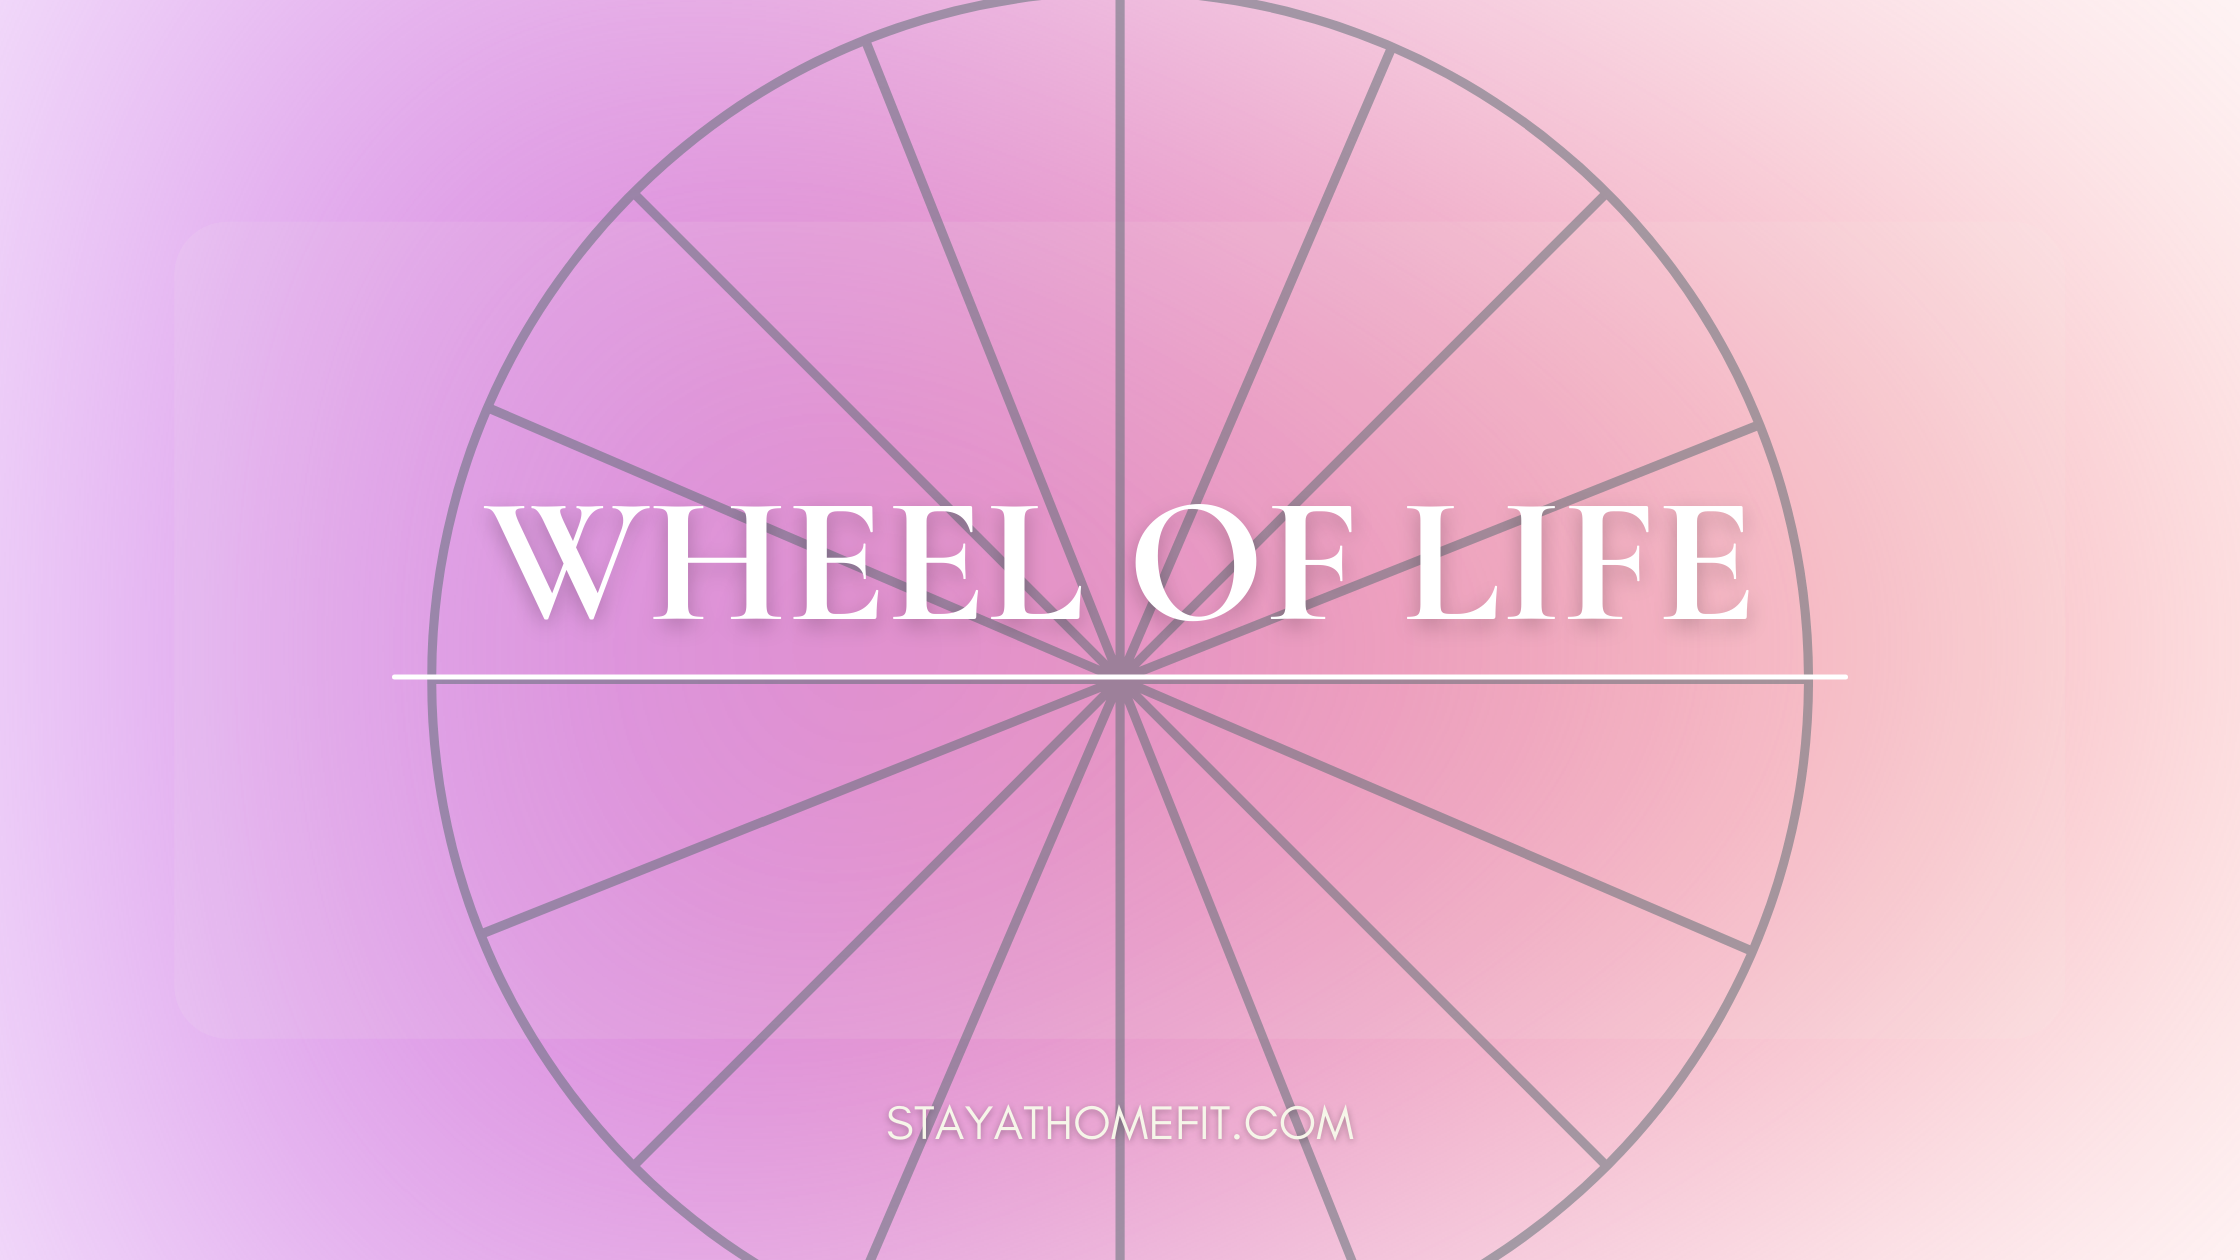 Blog Title: Wheel of Life